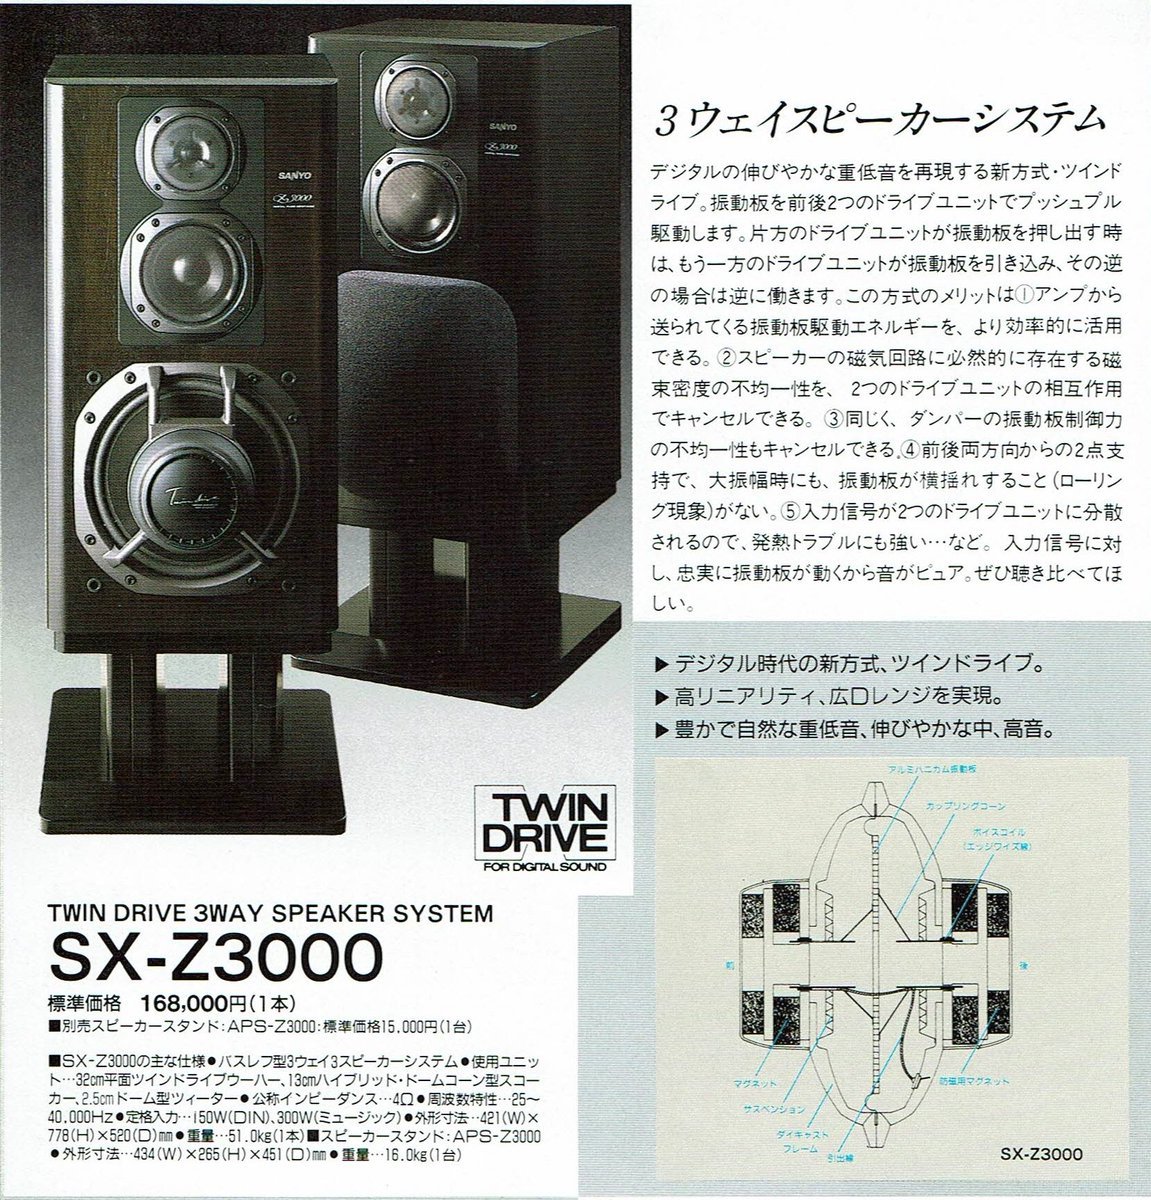 Sanyo SX-Z 3000-Prospekt-1990.jpg